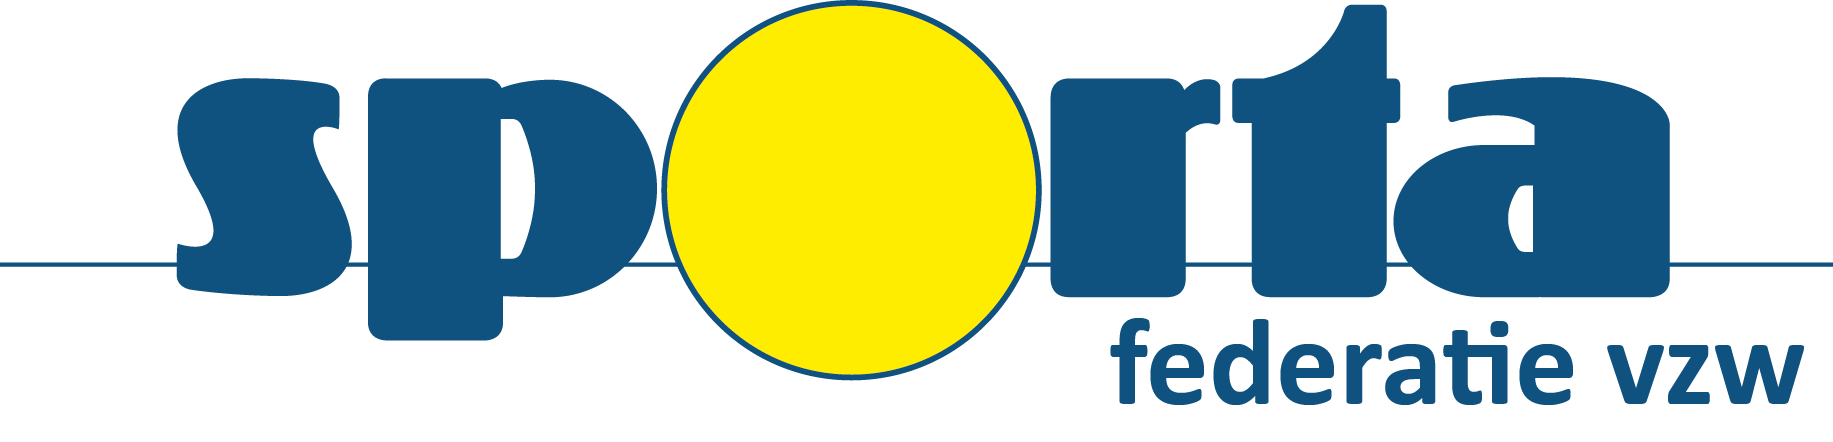 Sporta-logo